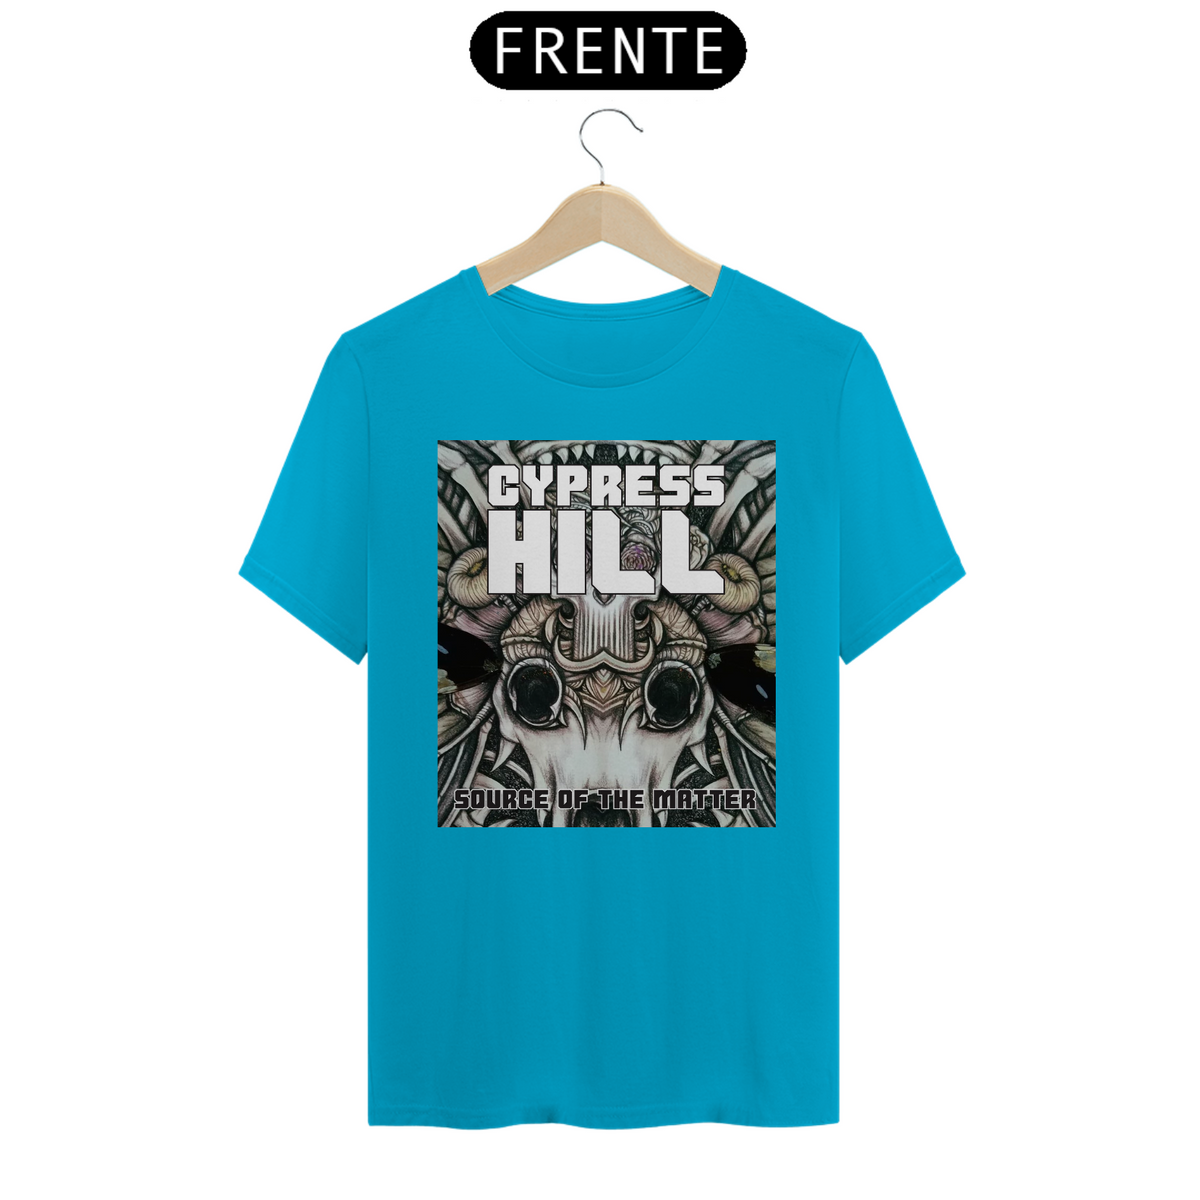 Nome do produto: Cypress Hill